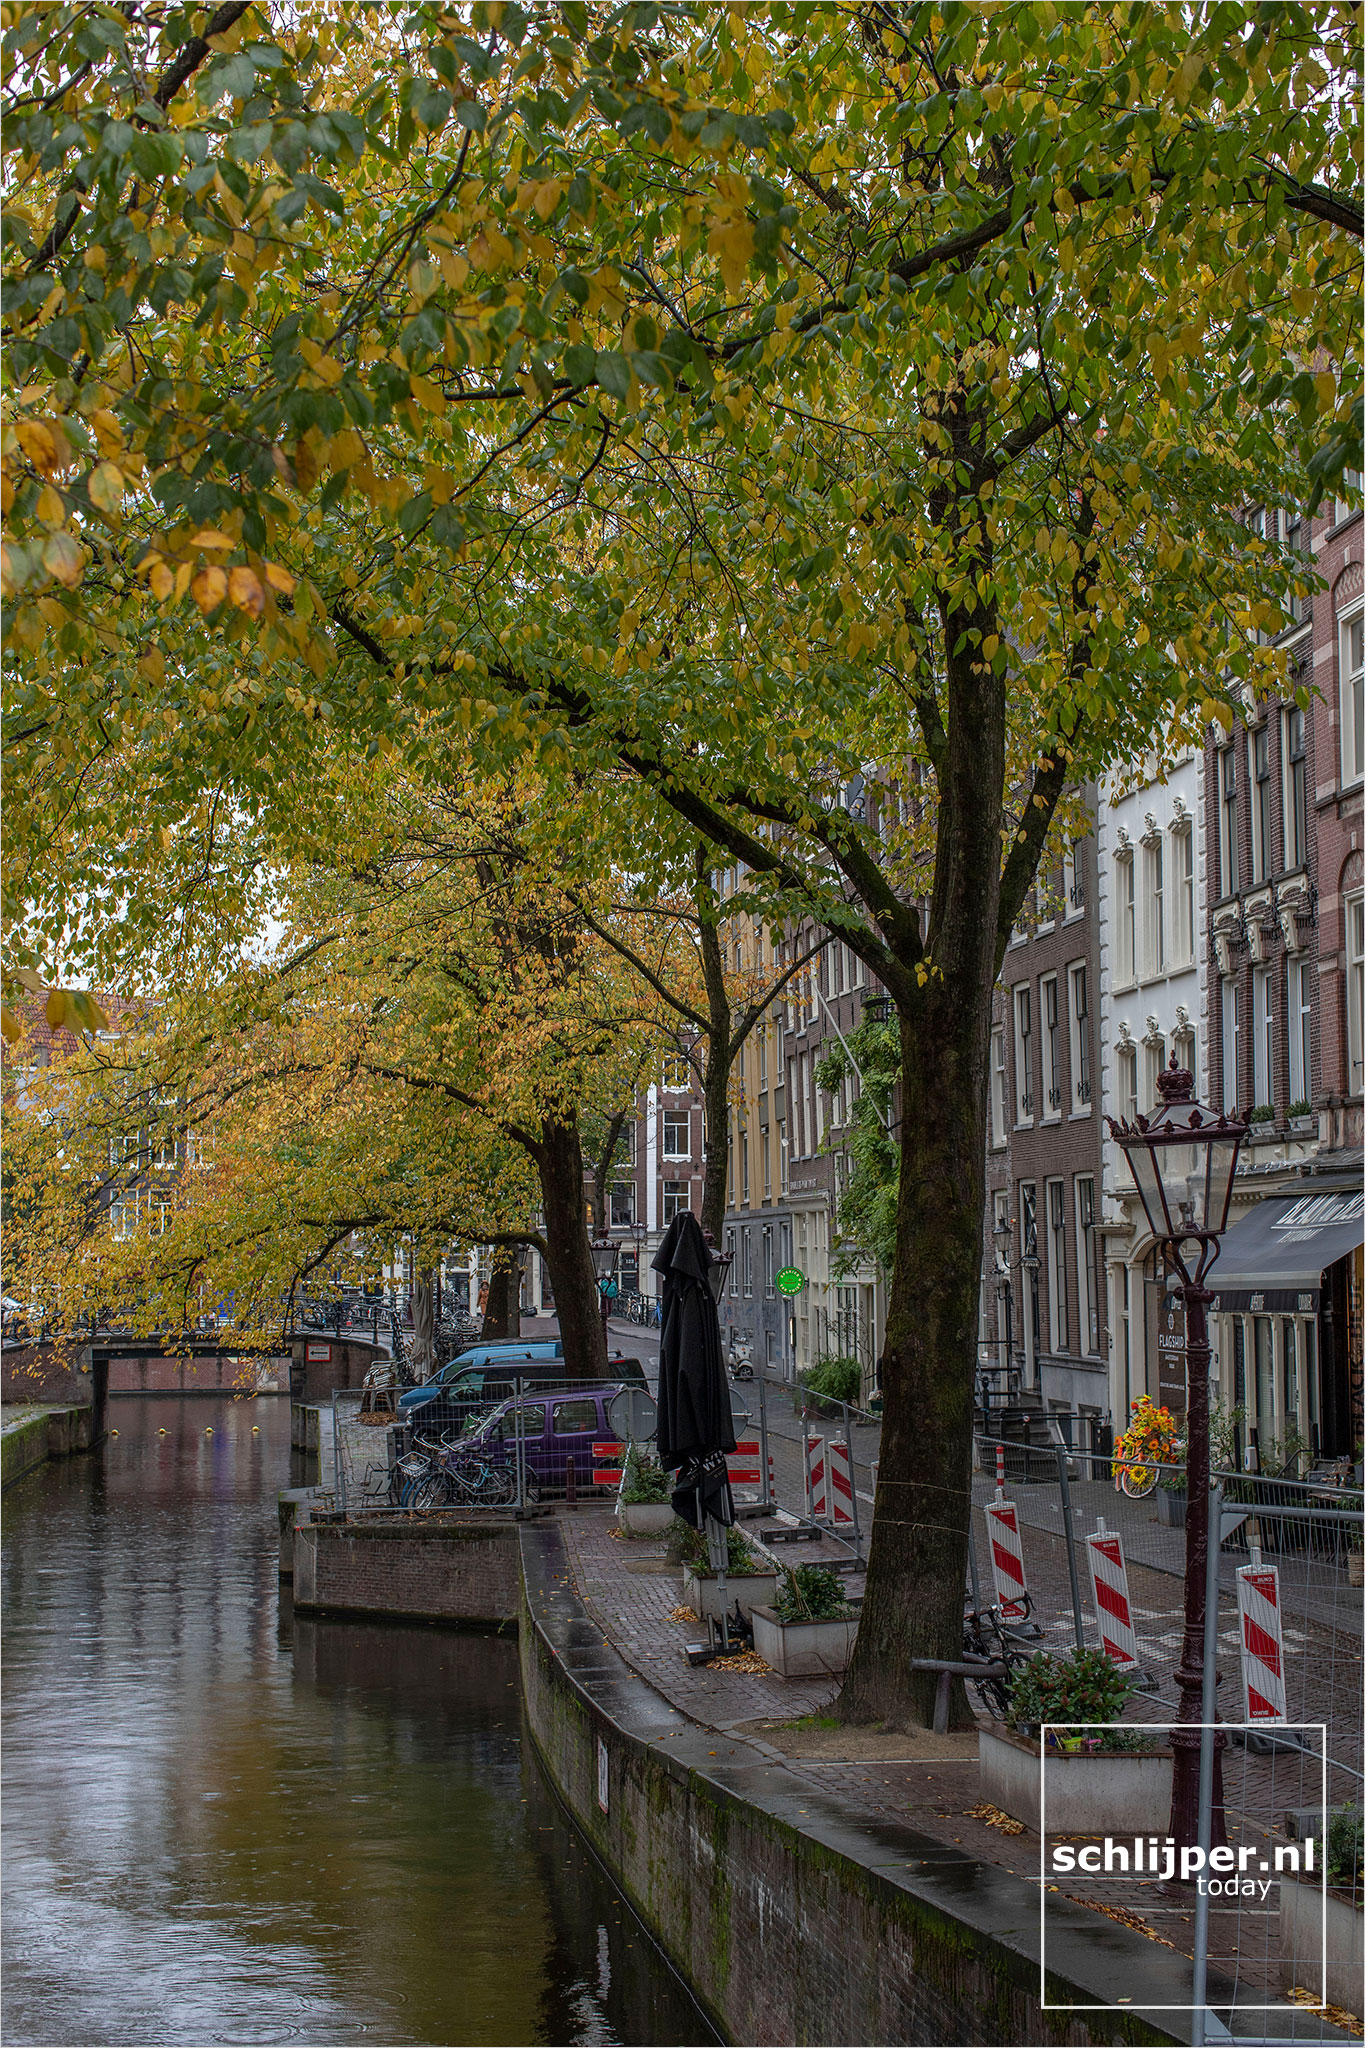 Nederland, Amsterdam, 29 oktober 2020